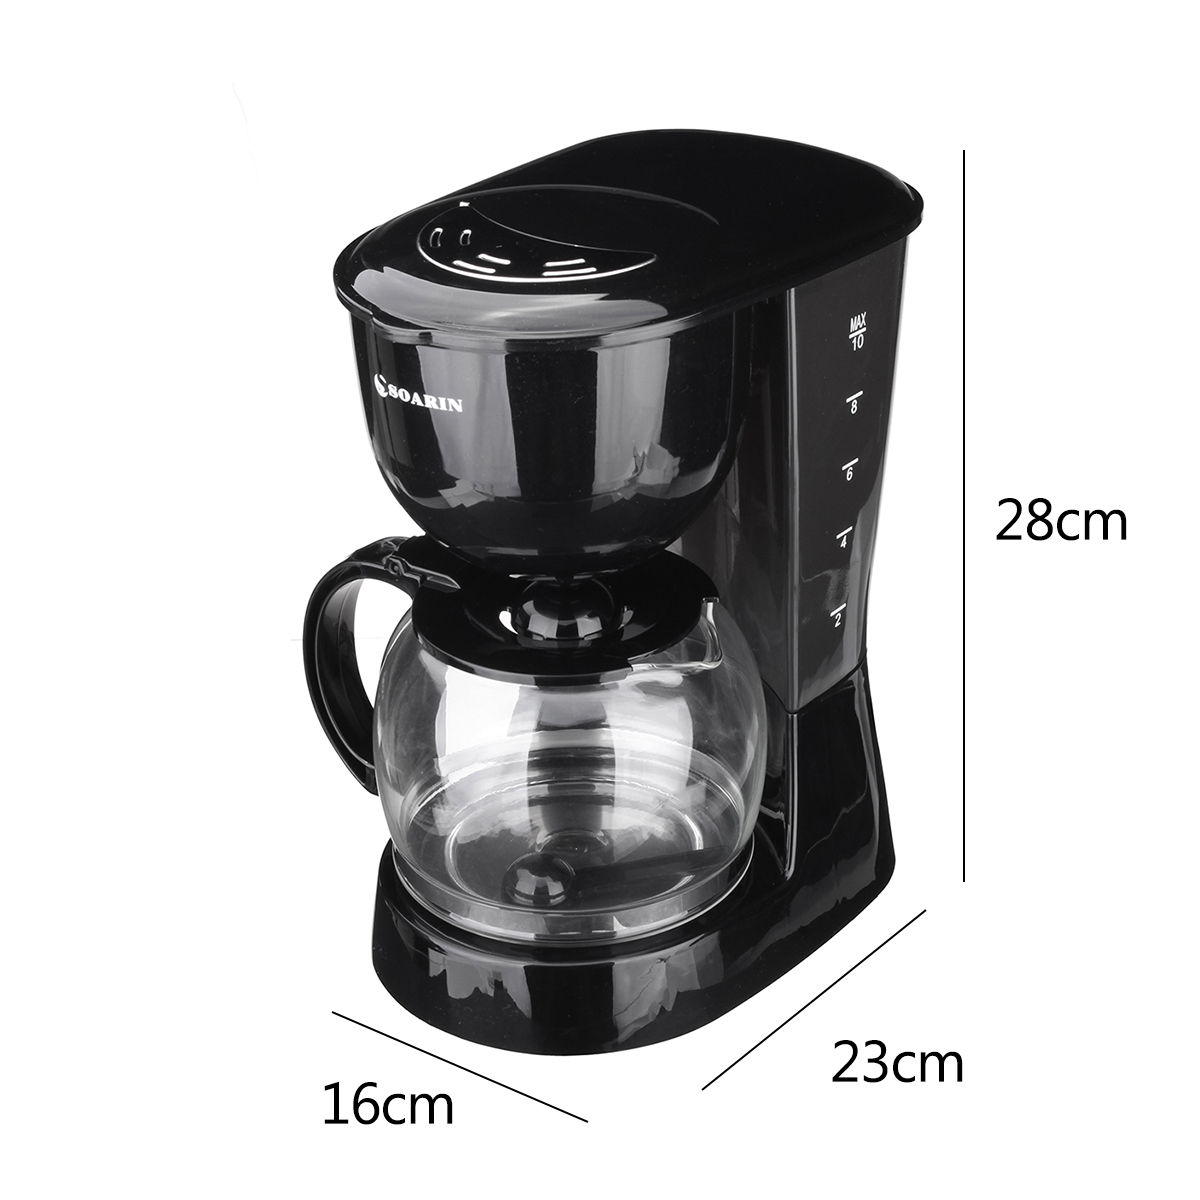 Soarin 1.25L 800W Electric Coffee Tea Maker Espresso Latte Machine Home Office Cafe Coffee Machine 24